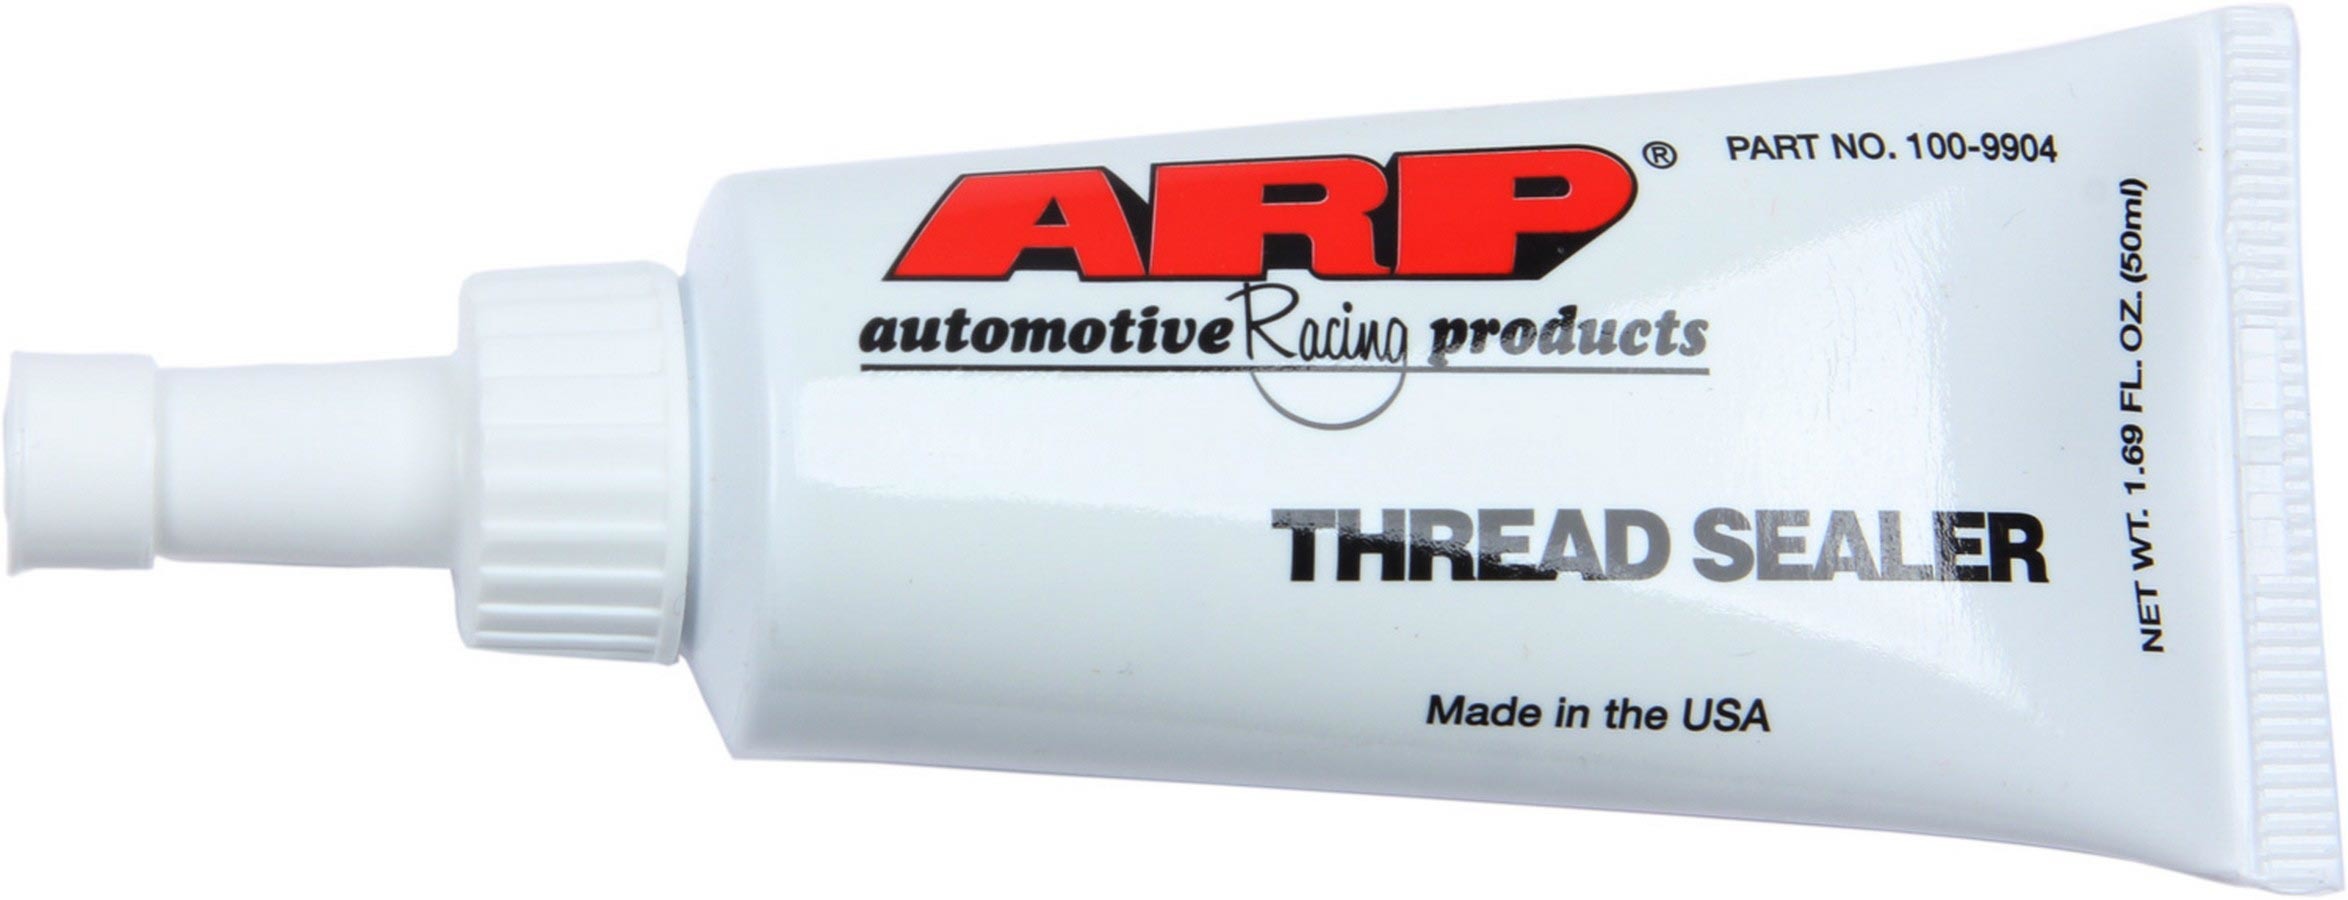 ARP 100-9904 PTFE Thread Sealer - 1.69oz. Tube